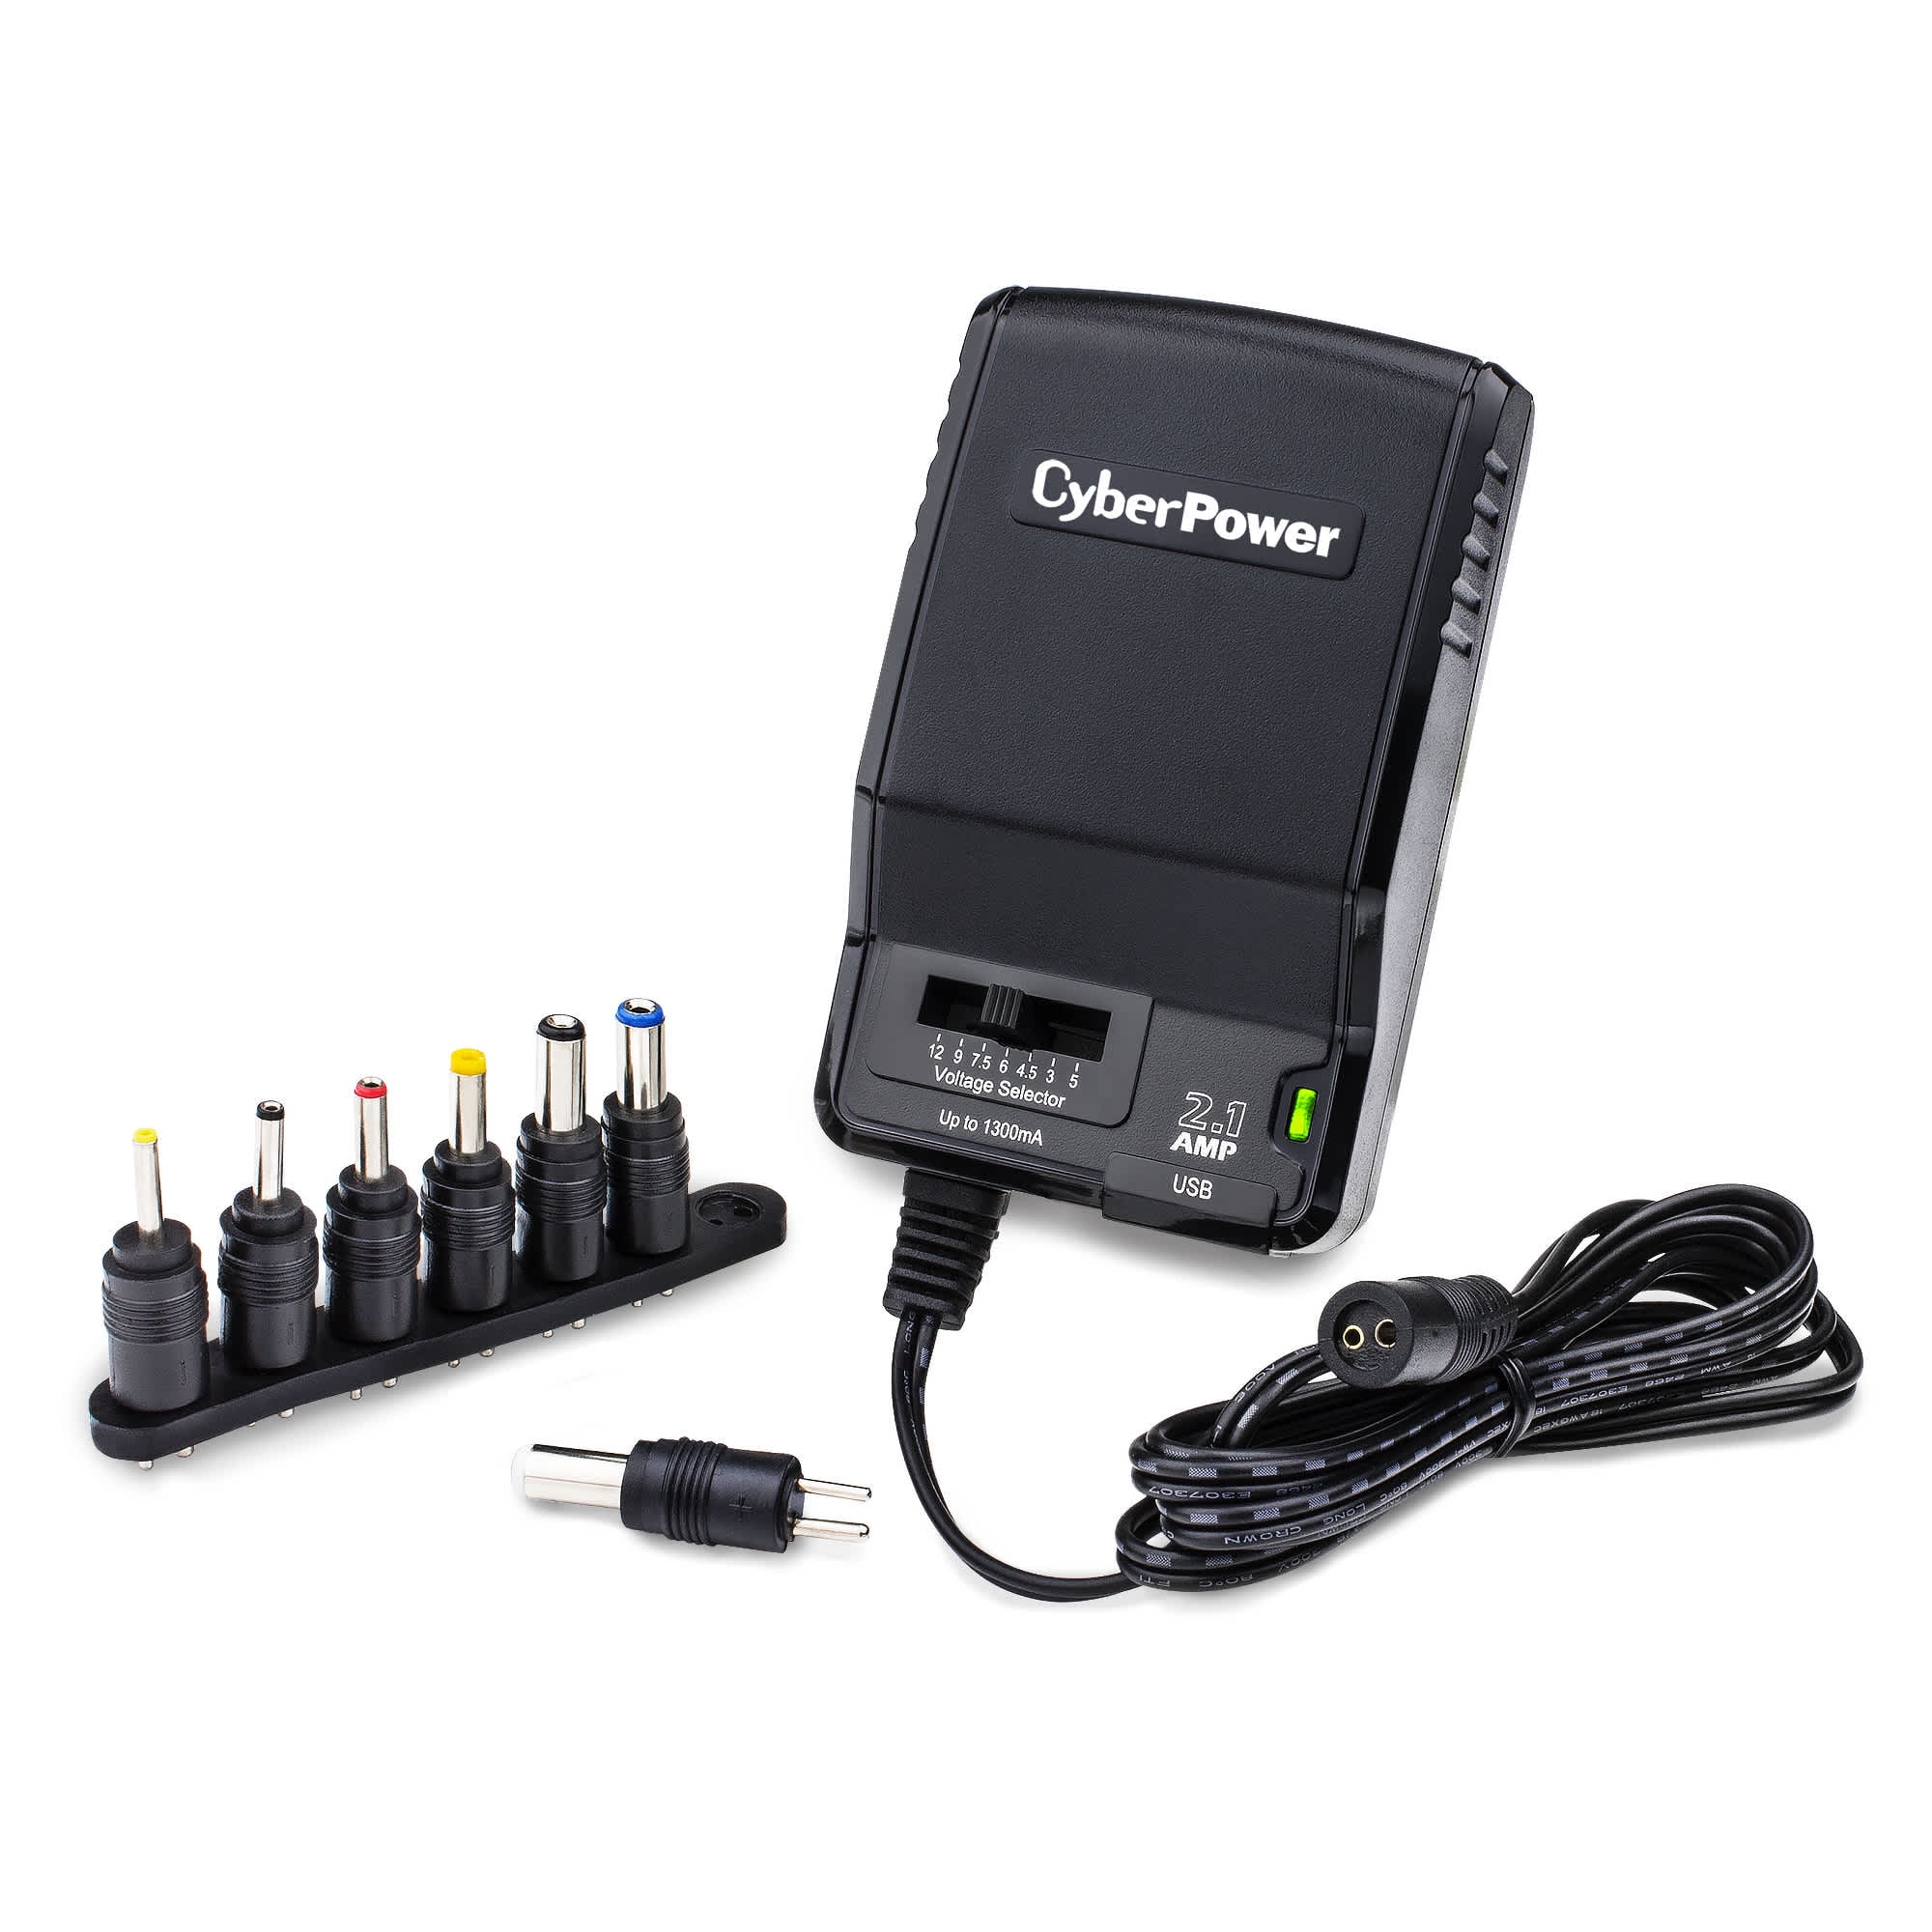 CyberPower CPUAC1U1300 Universal Power Adapter 3 -12 Volt / 1300mA